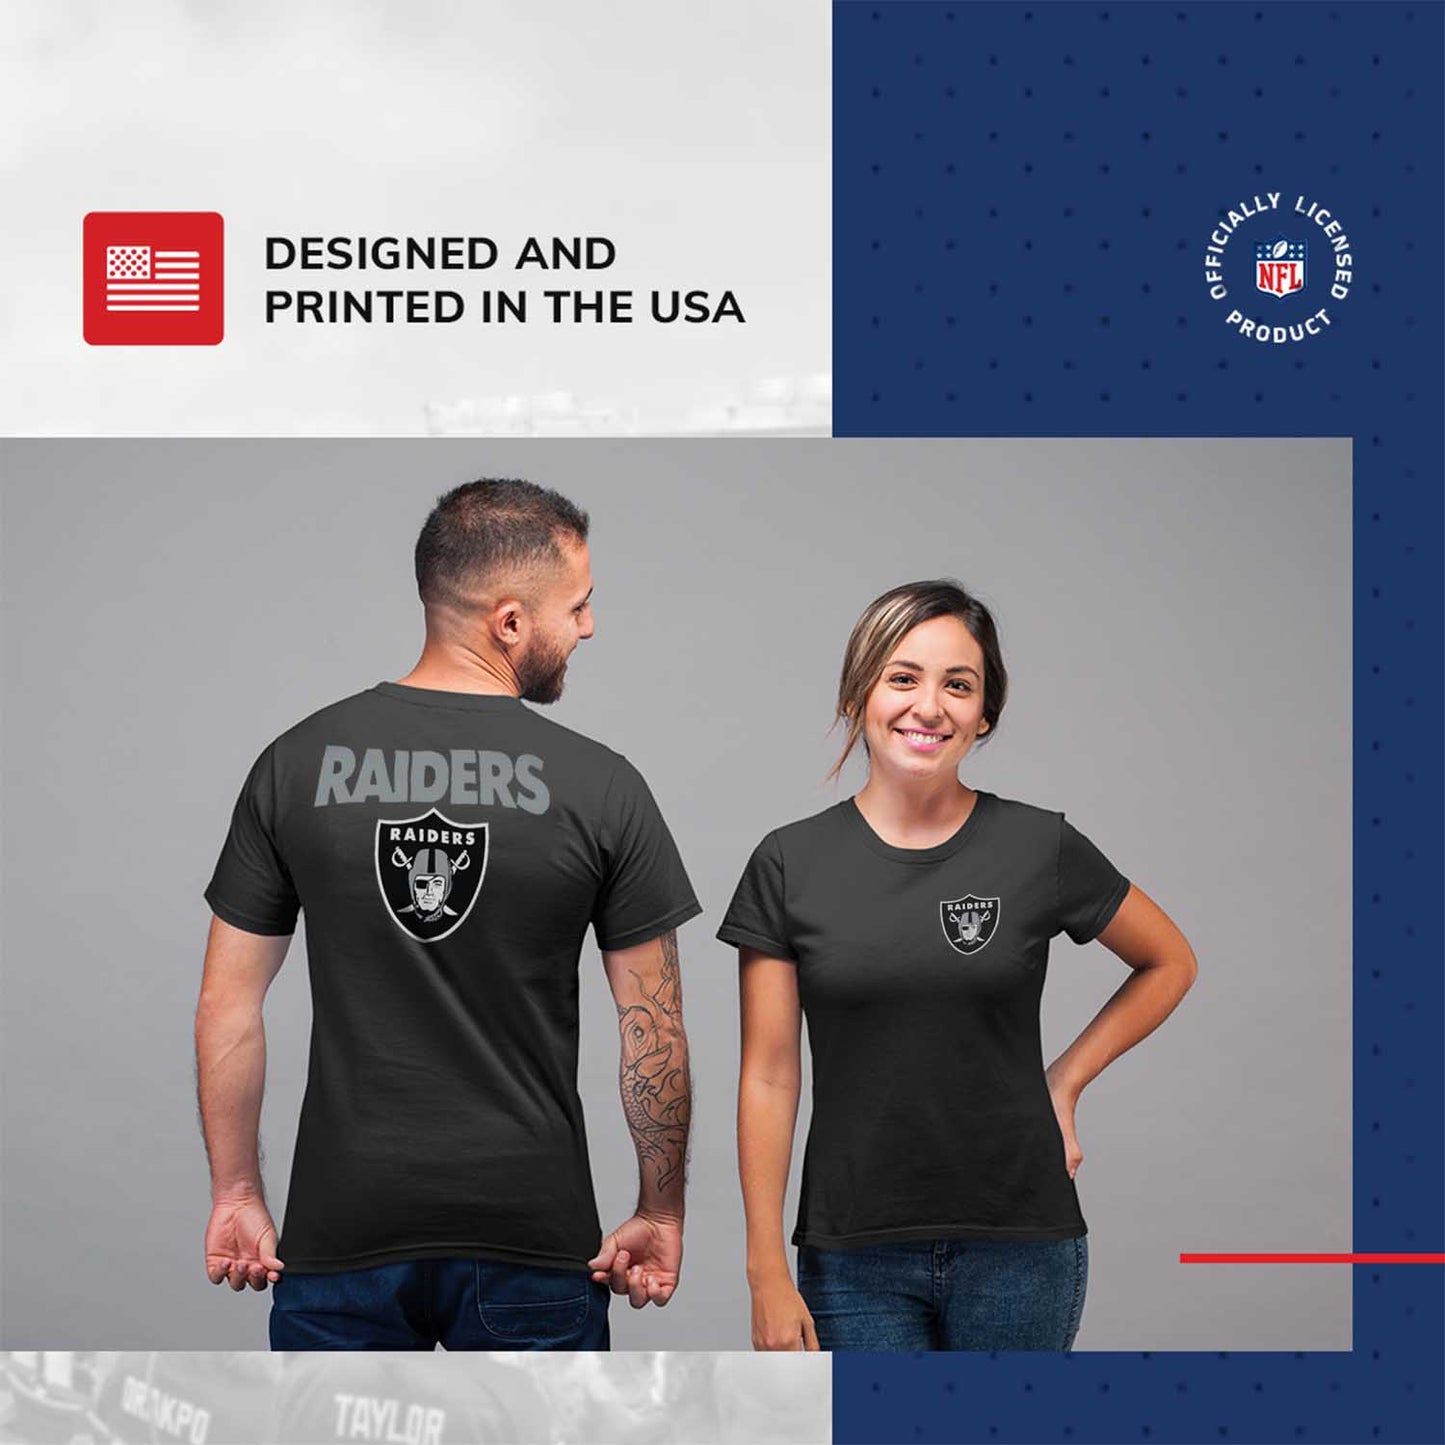 Las Vegas Raiders NFL Pro Football Final Countdown Adult Cotton-Poly Short Sleeved T-Shirt For Men & Women - Black